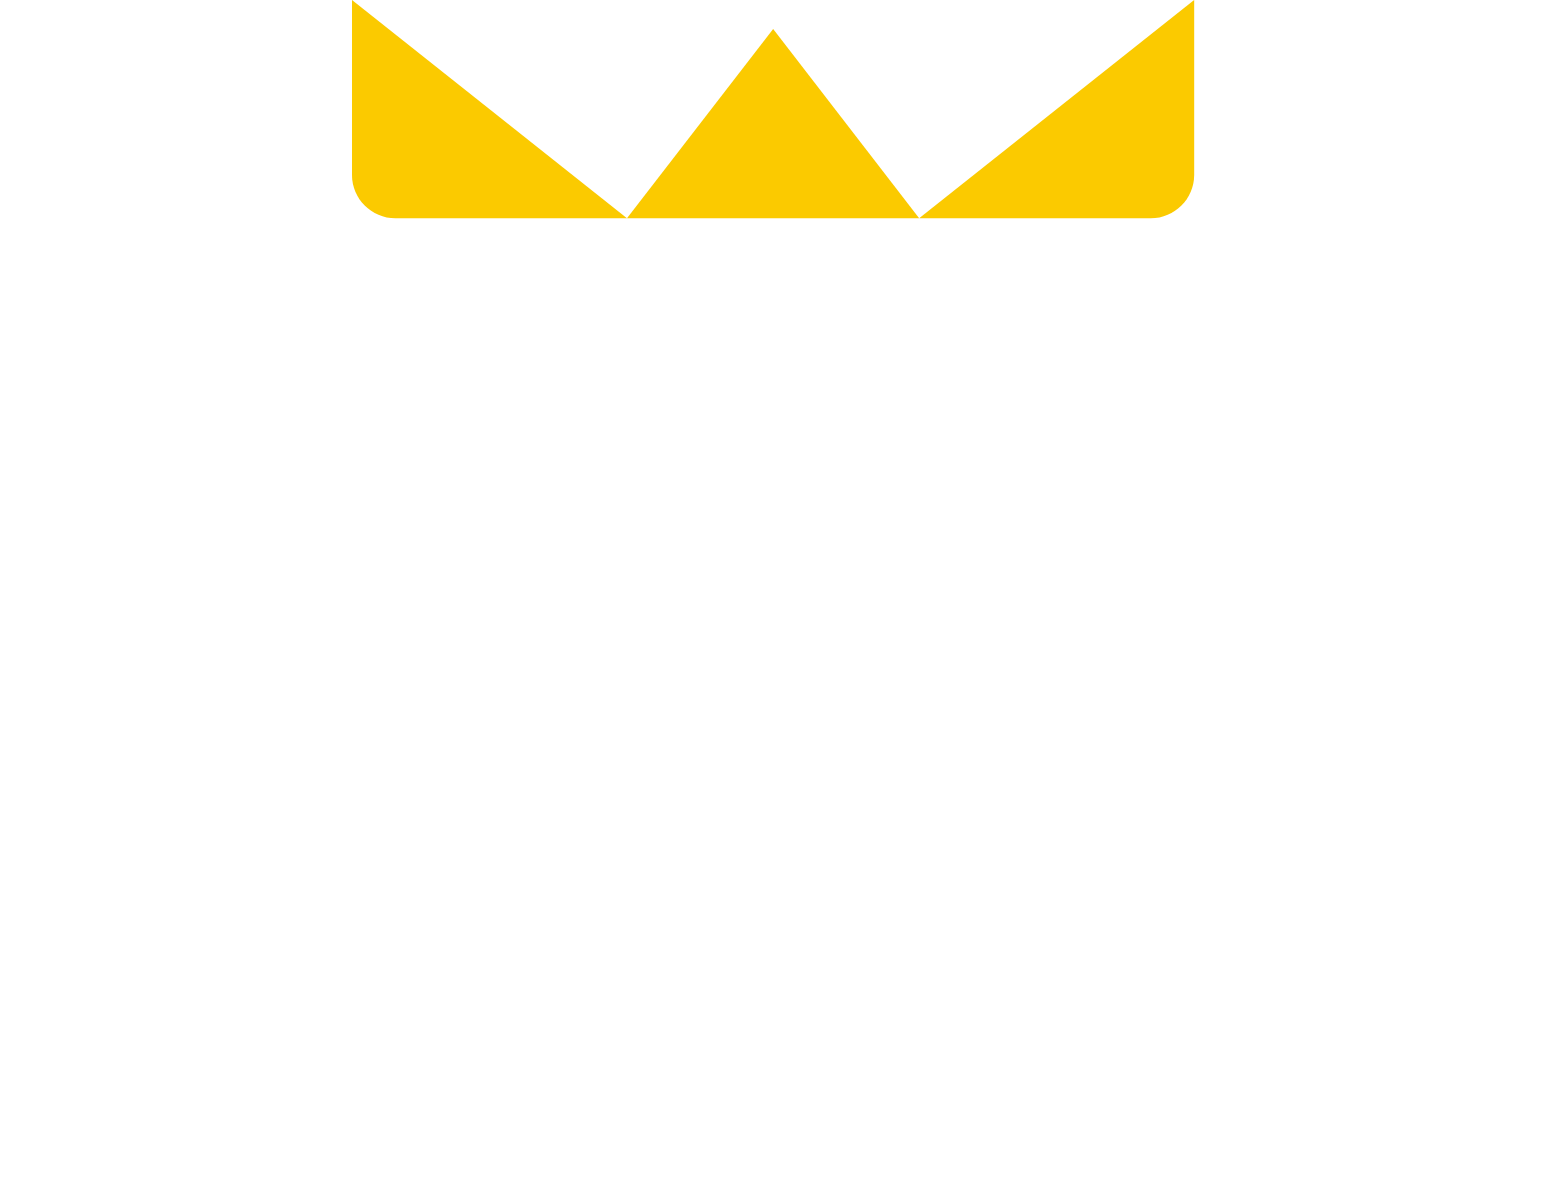 Ölgerðin Egill Skallagrímsson logo large for dark backgrounds (transparent PNG)